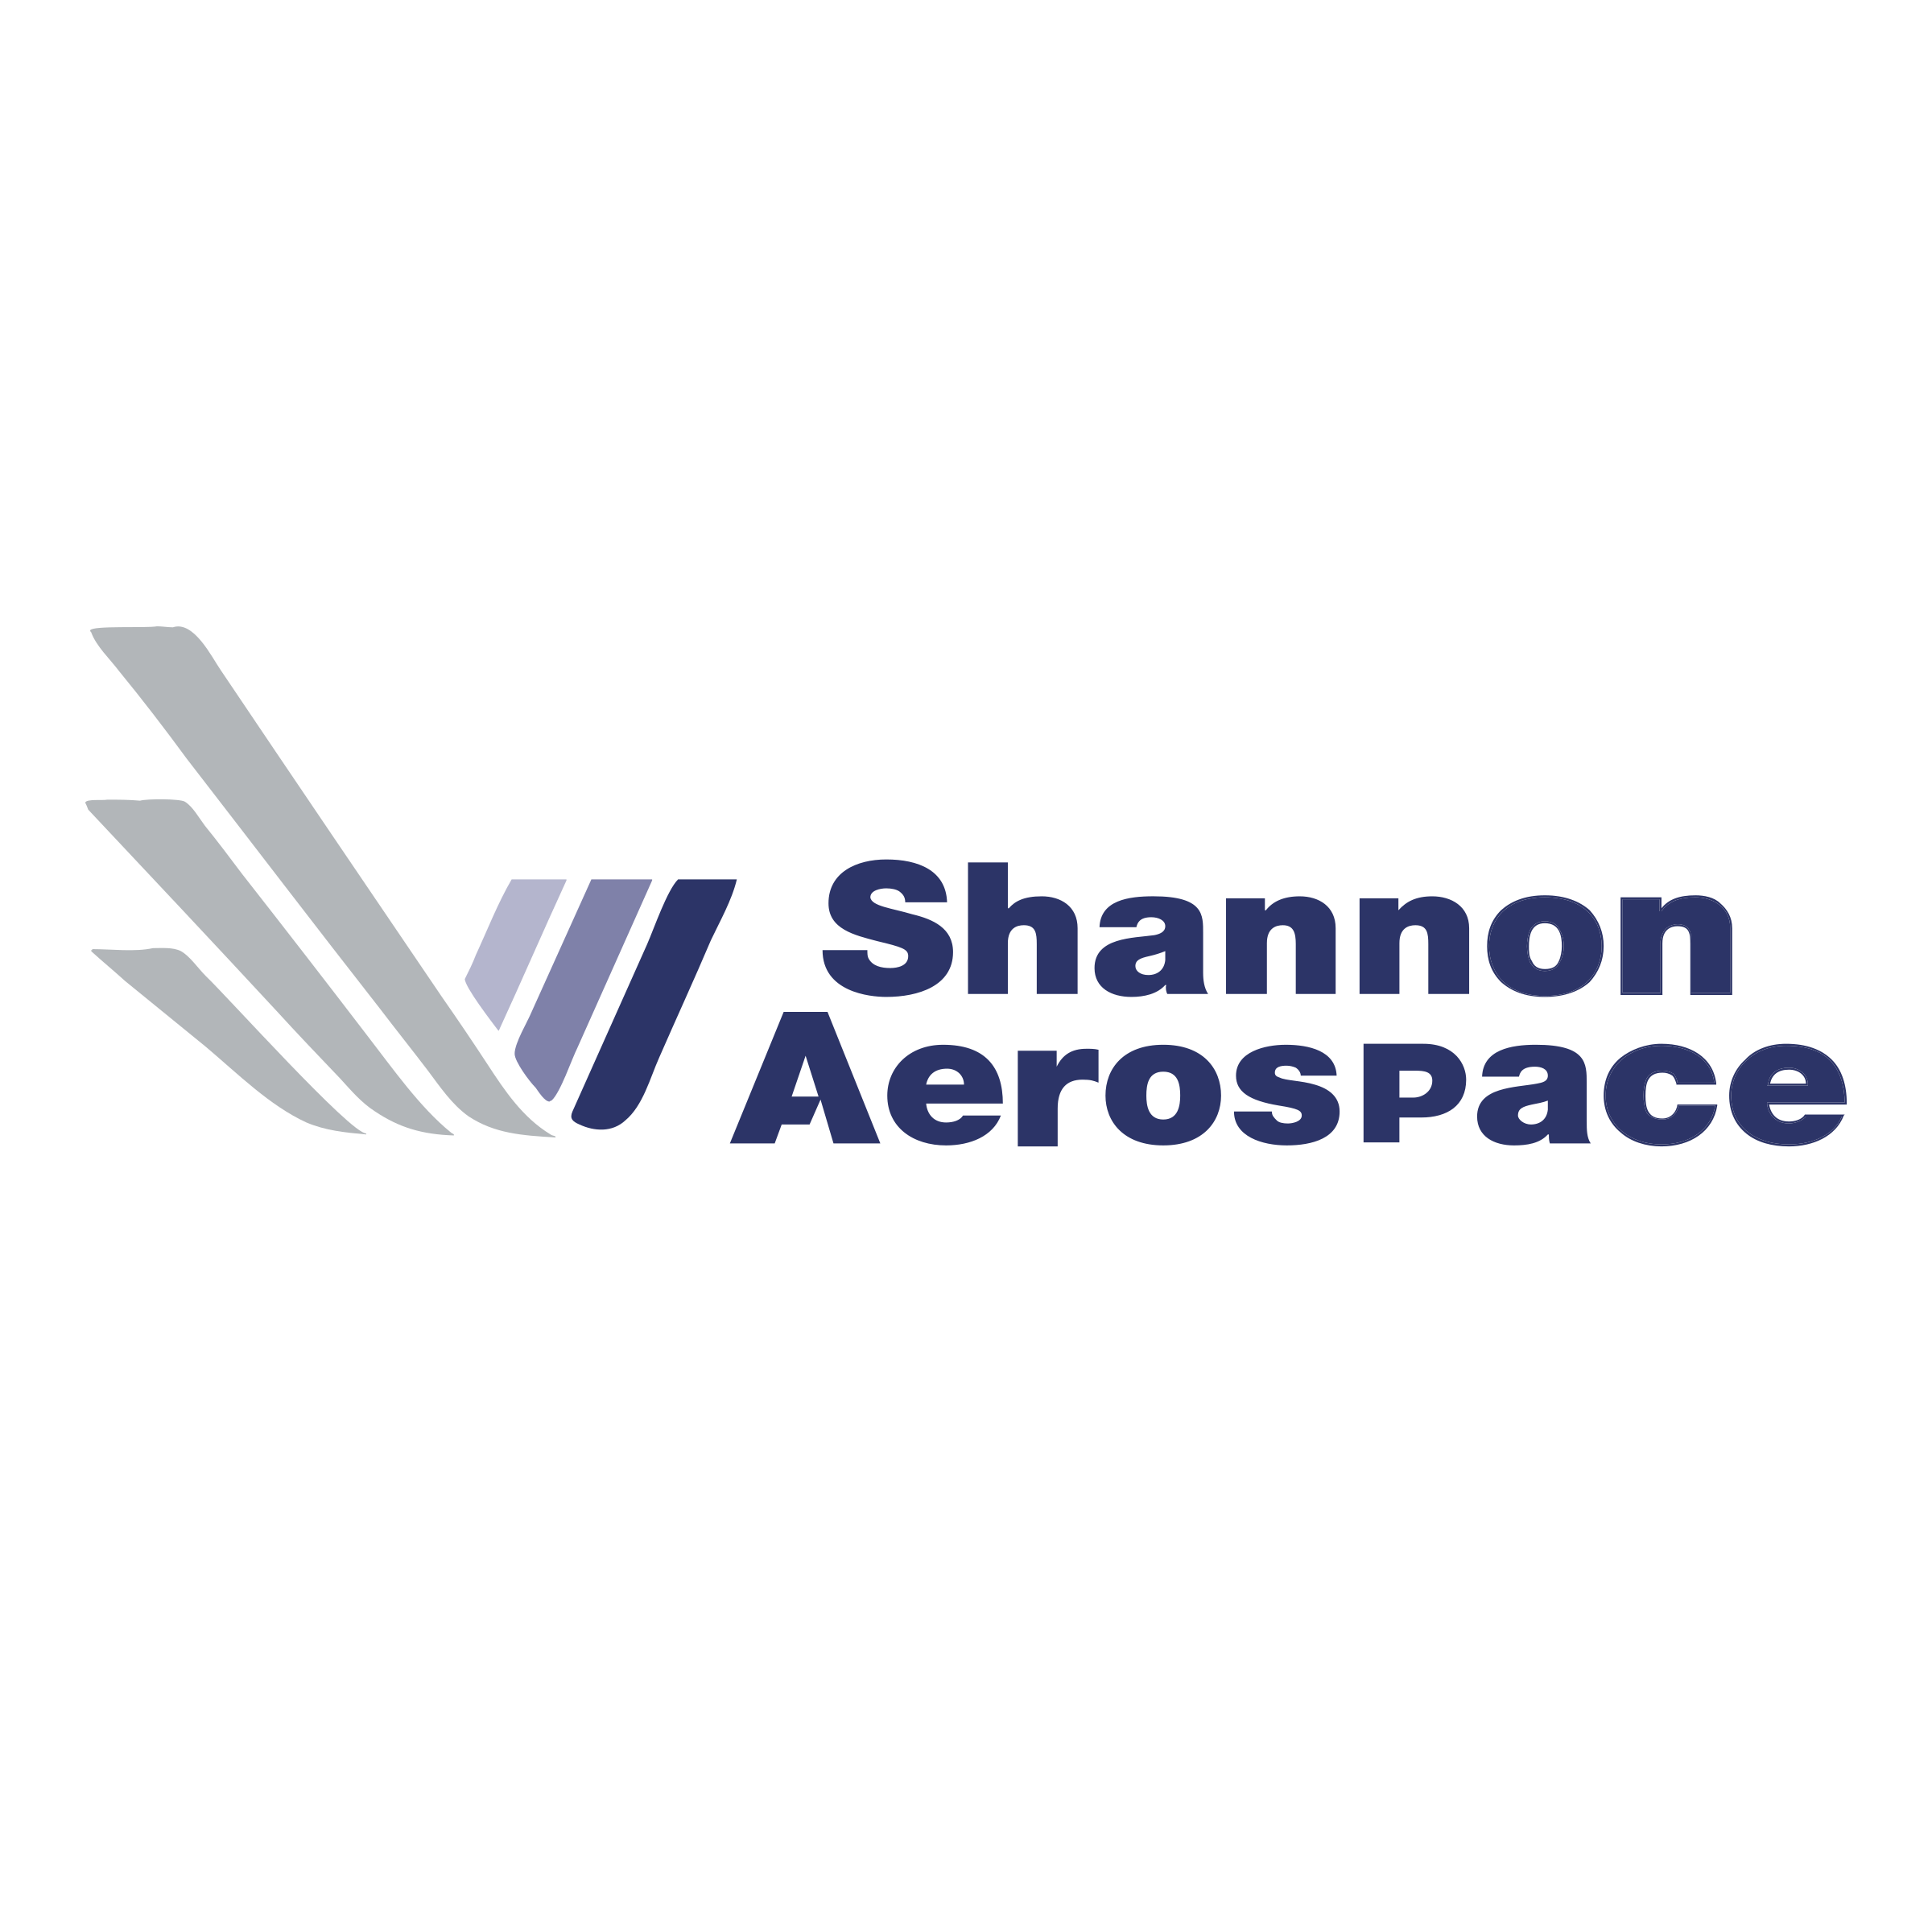 Shannon Logo - Shannon Aerospace Logo PNG Transparent & SVG Vector - Freebie Supply